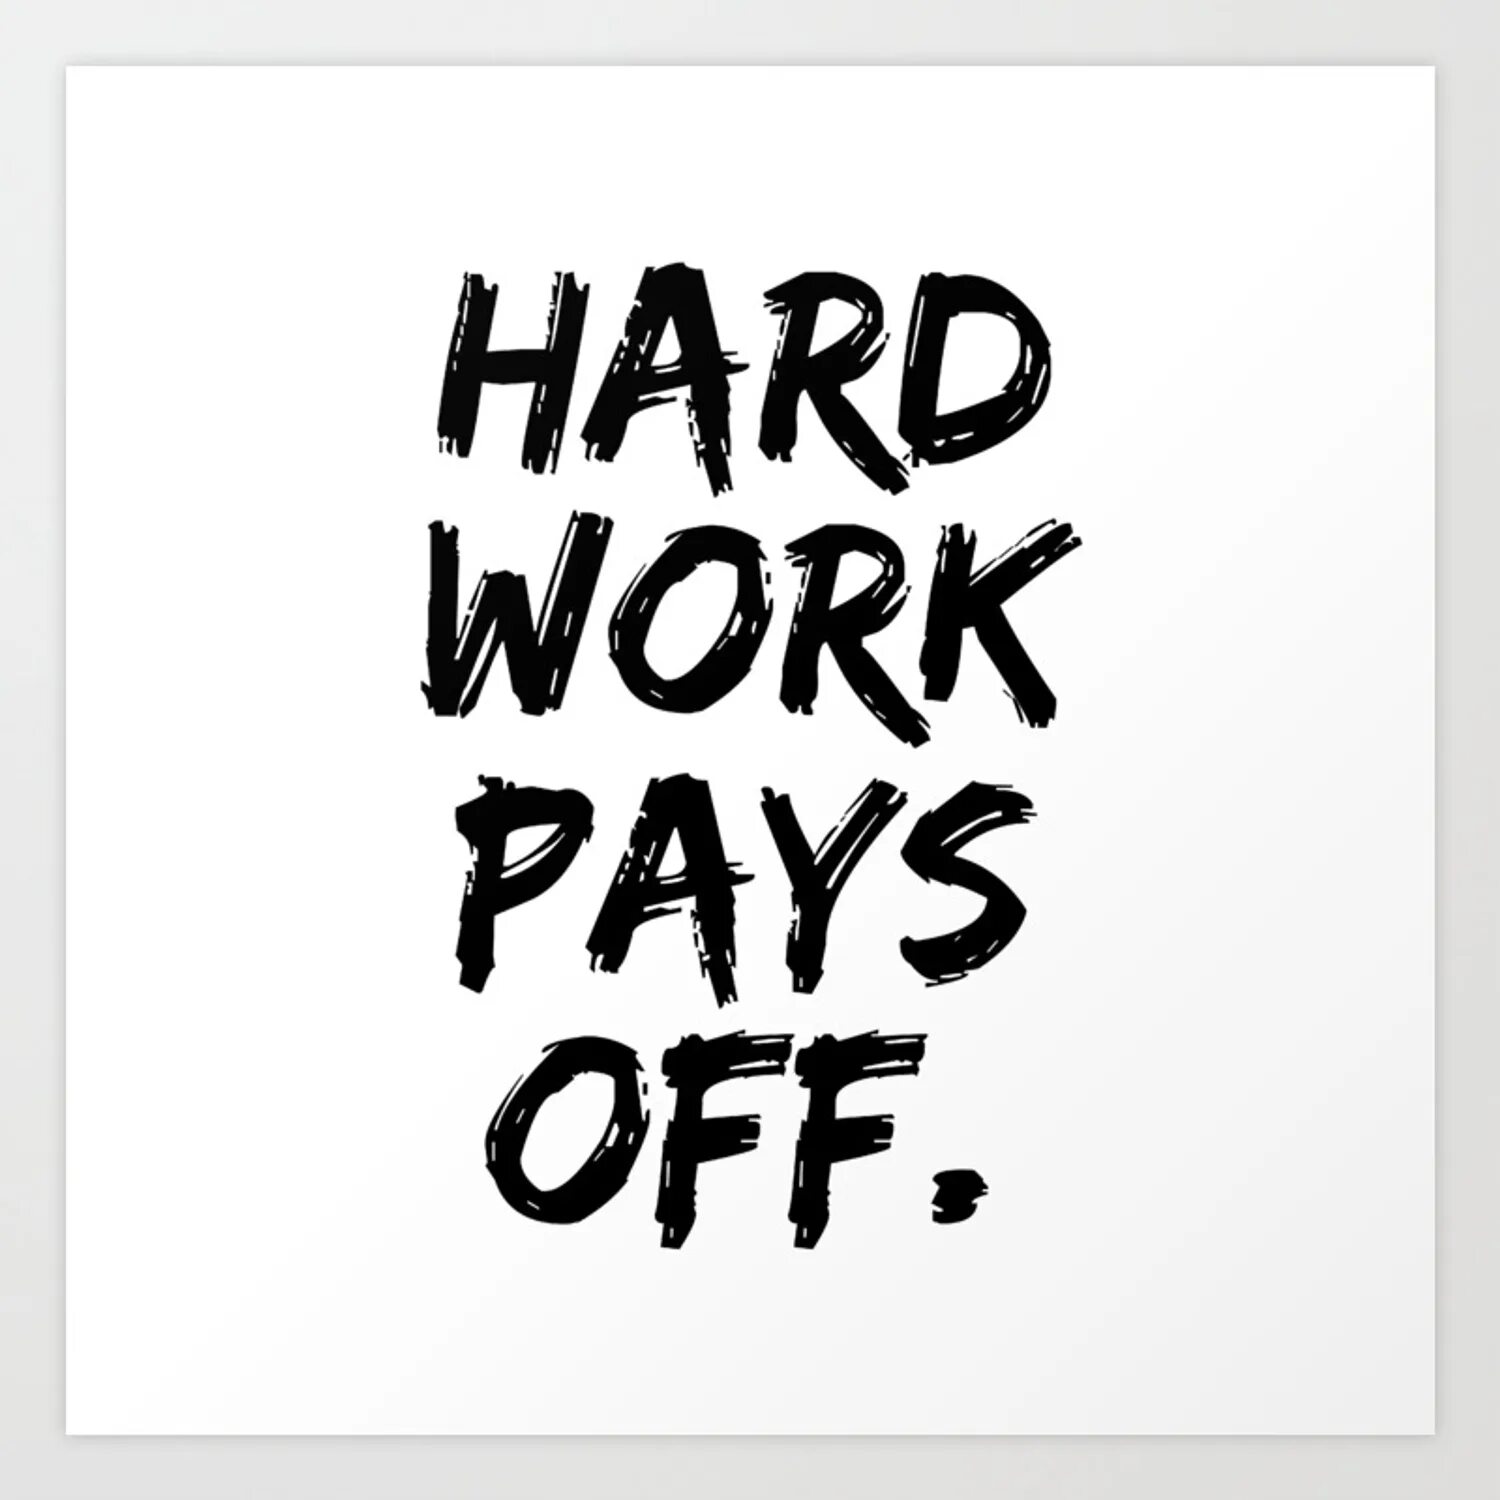 Hard work pays off. Hard work pays off обои. Hard work pays off перевод. Картинка hard work pays off. Work off the payment